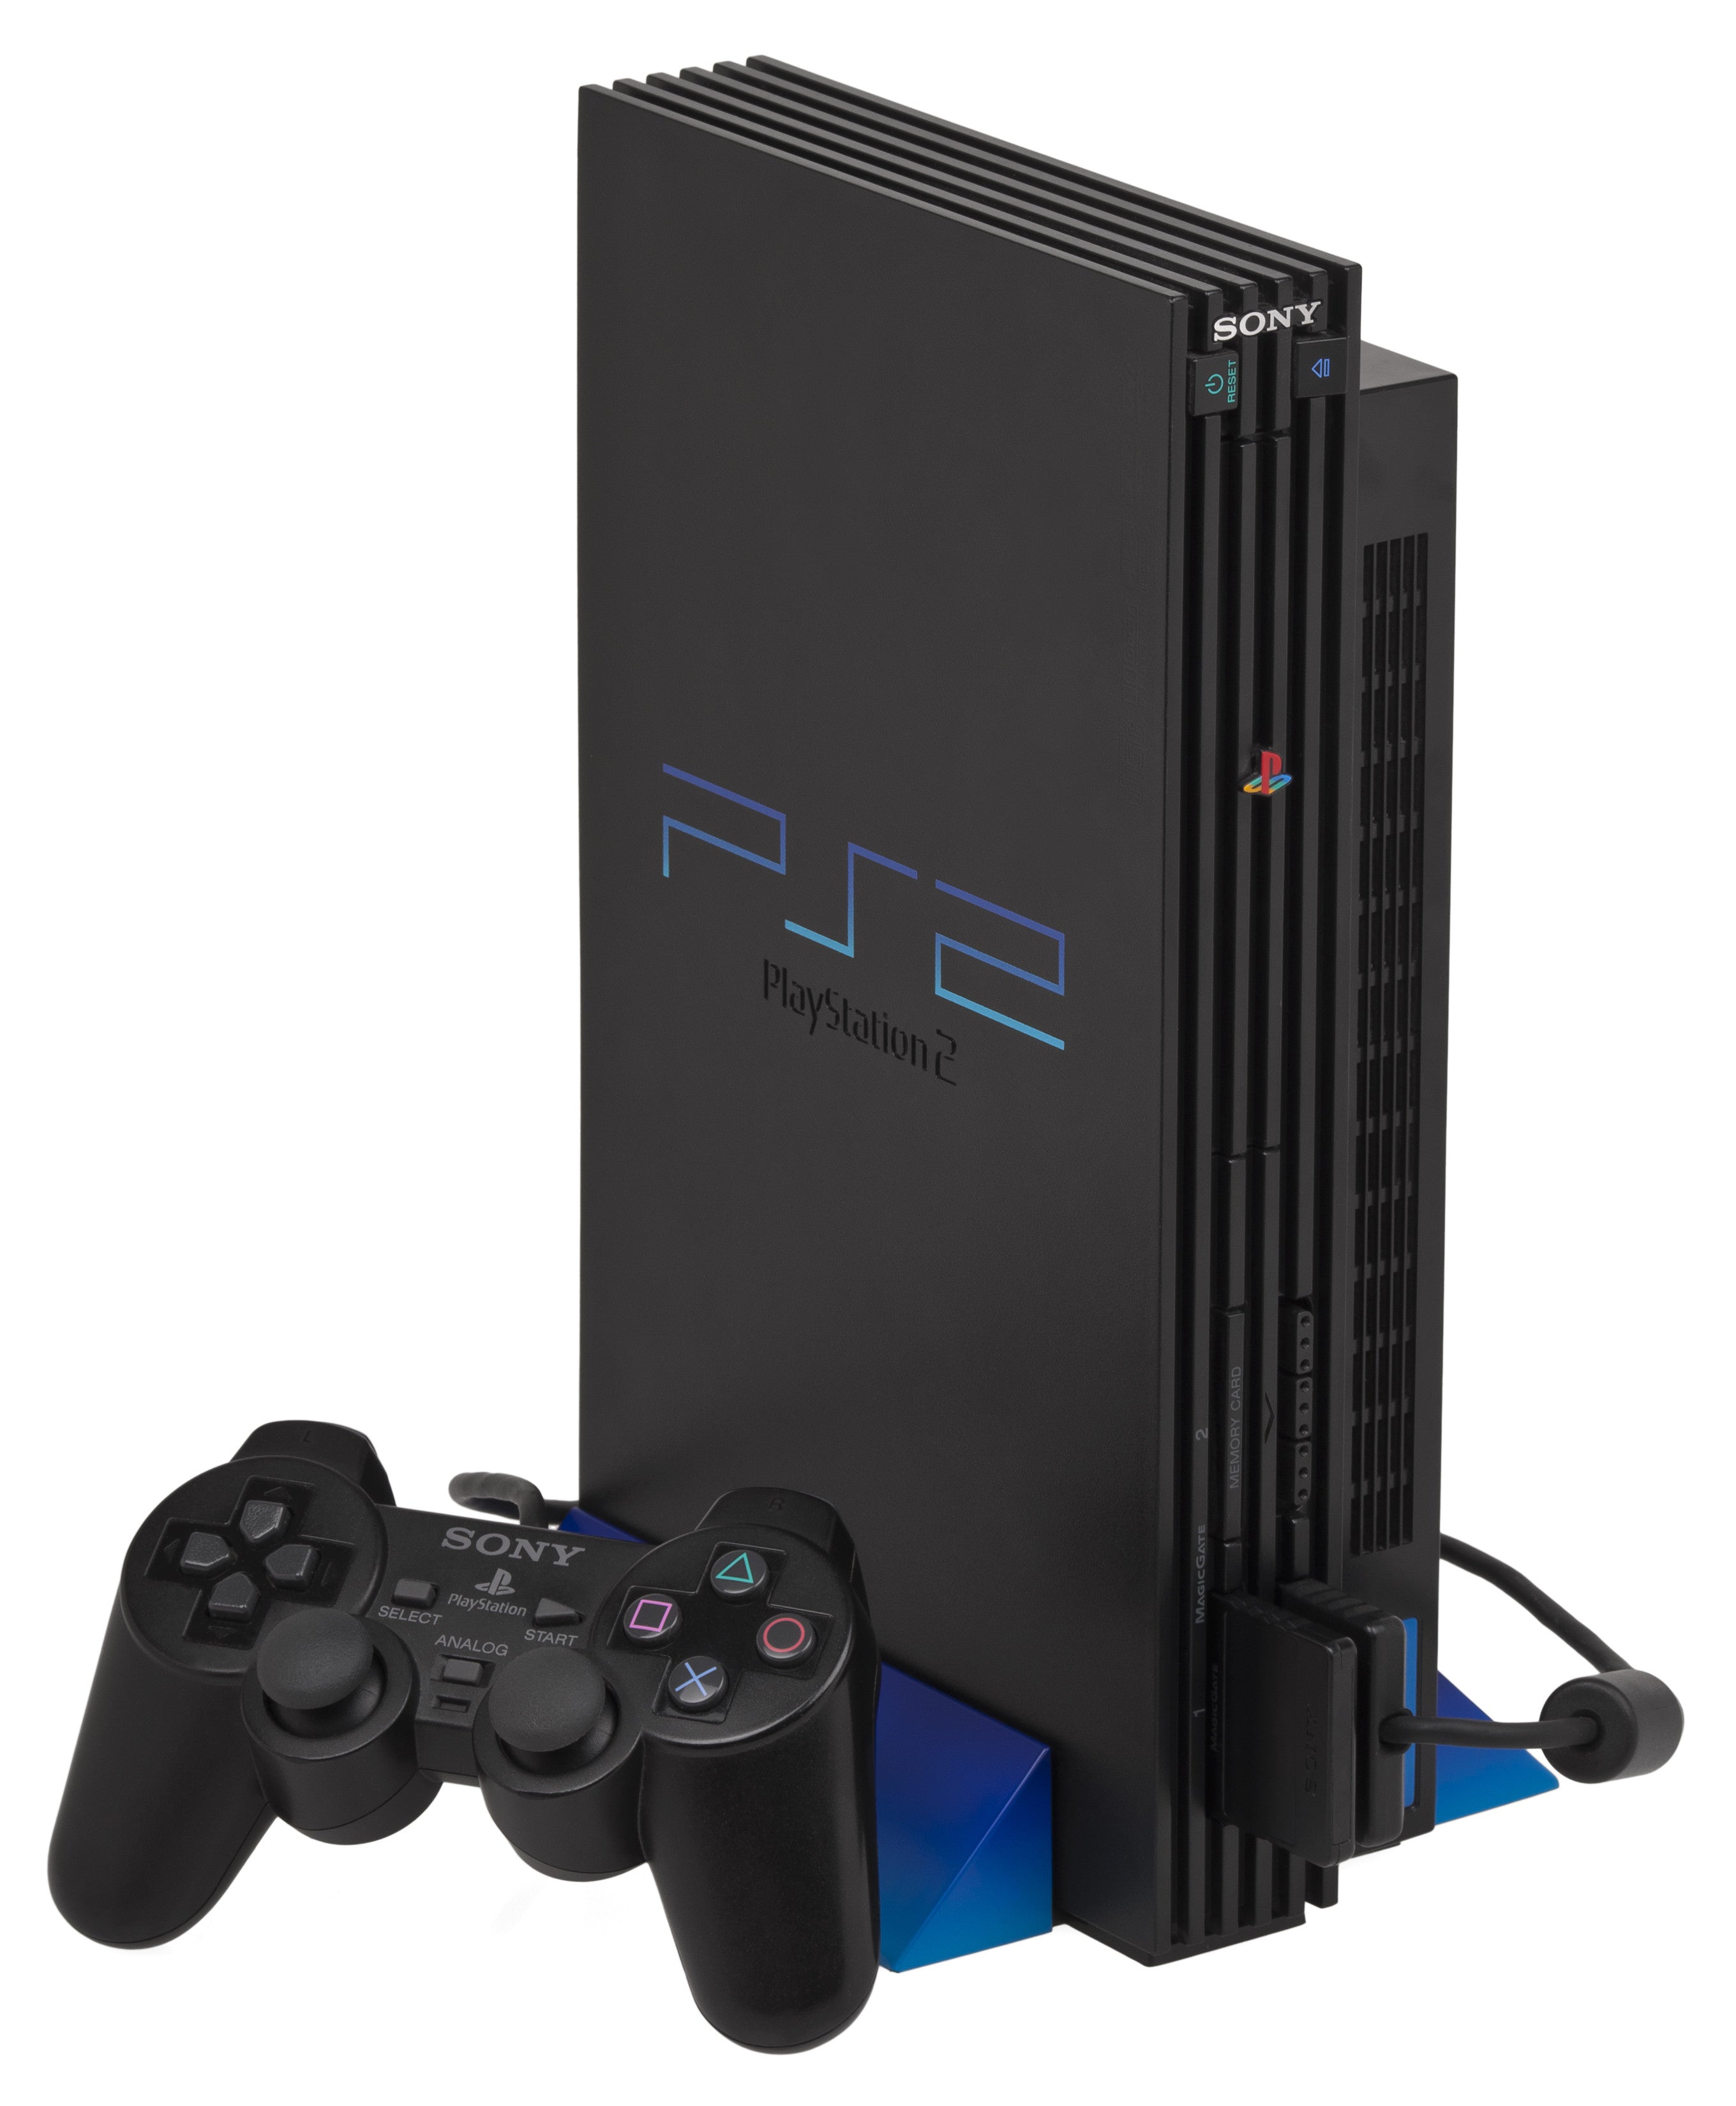 Sony Playstation 2 (PS2) Retropixl Retrogaming retro gaming Rare Console Collector Limited Edition Japan Import